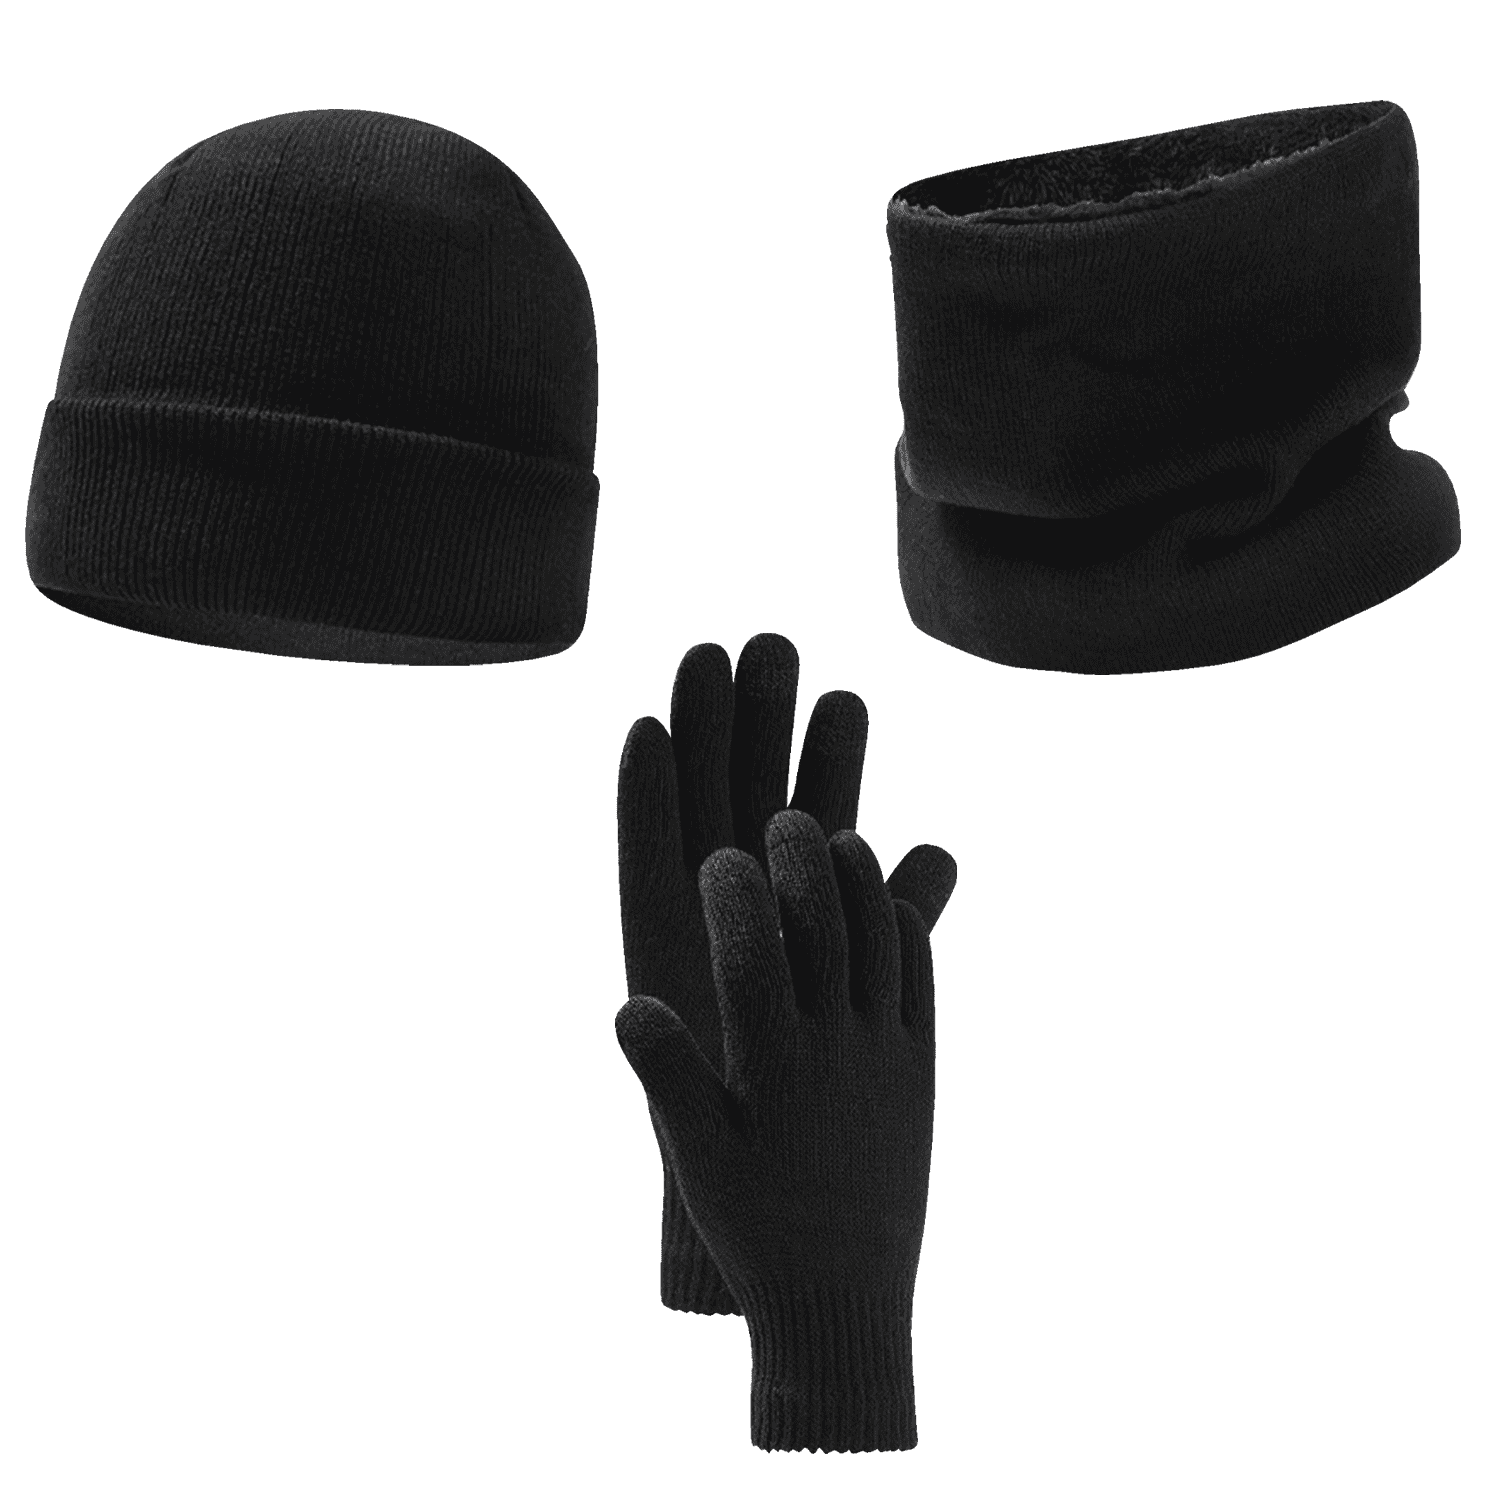 3 Pieces Winter Warm Set Cat Ear Beanie Hat Neck Warmer Scarf Touchscreen Gloves Black 